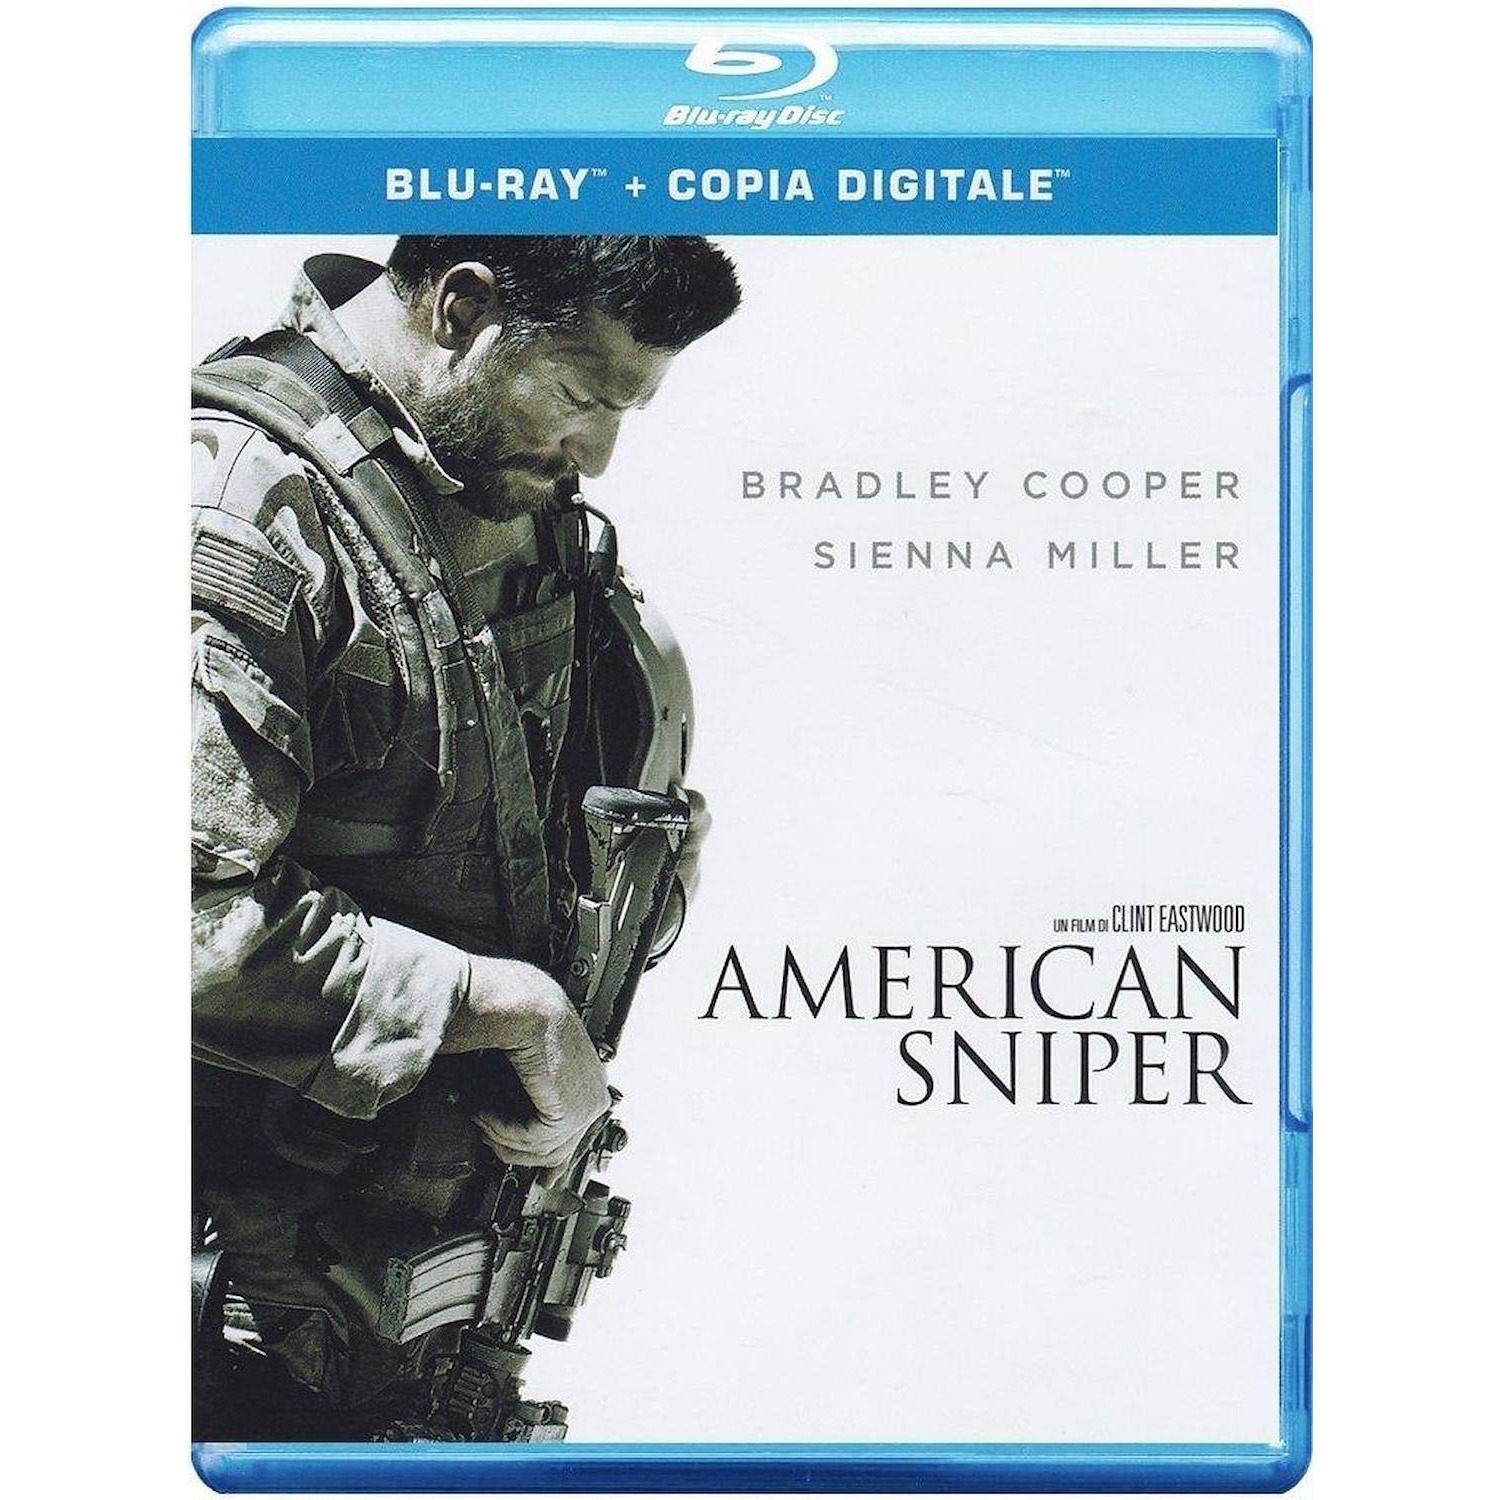 Immagine per Blu-ray American Sniper da DIMOStore